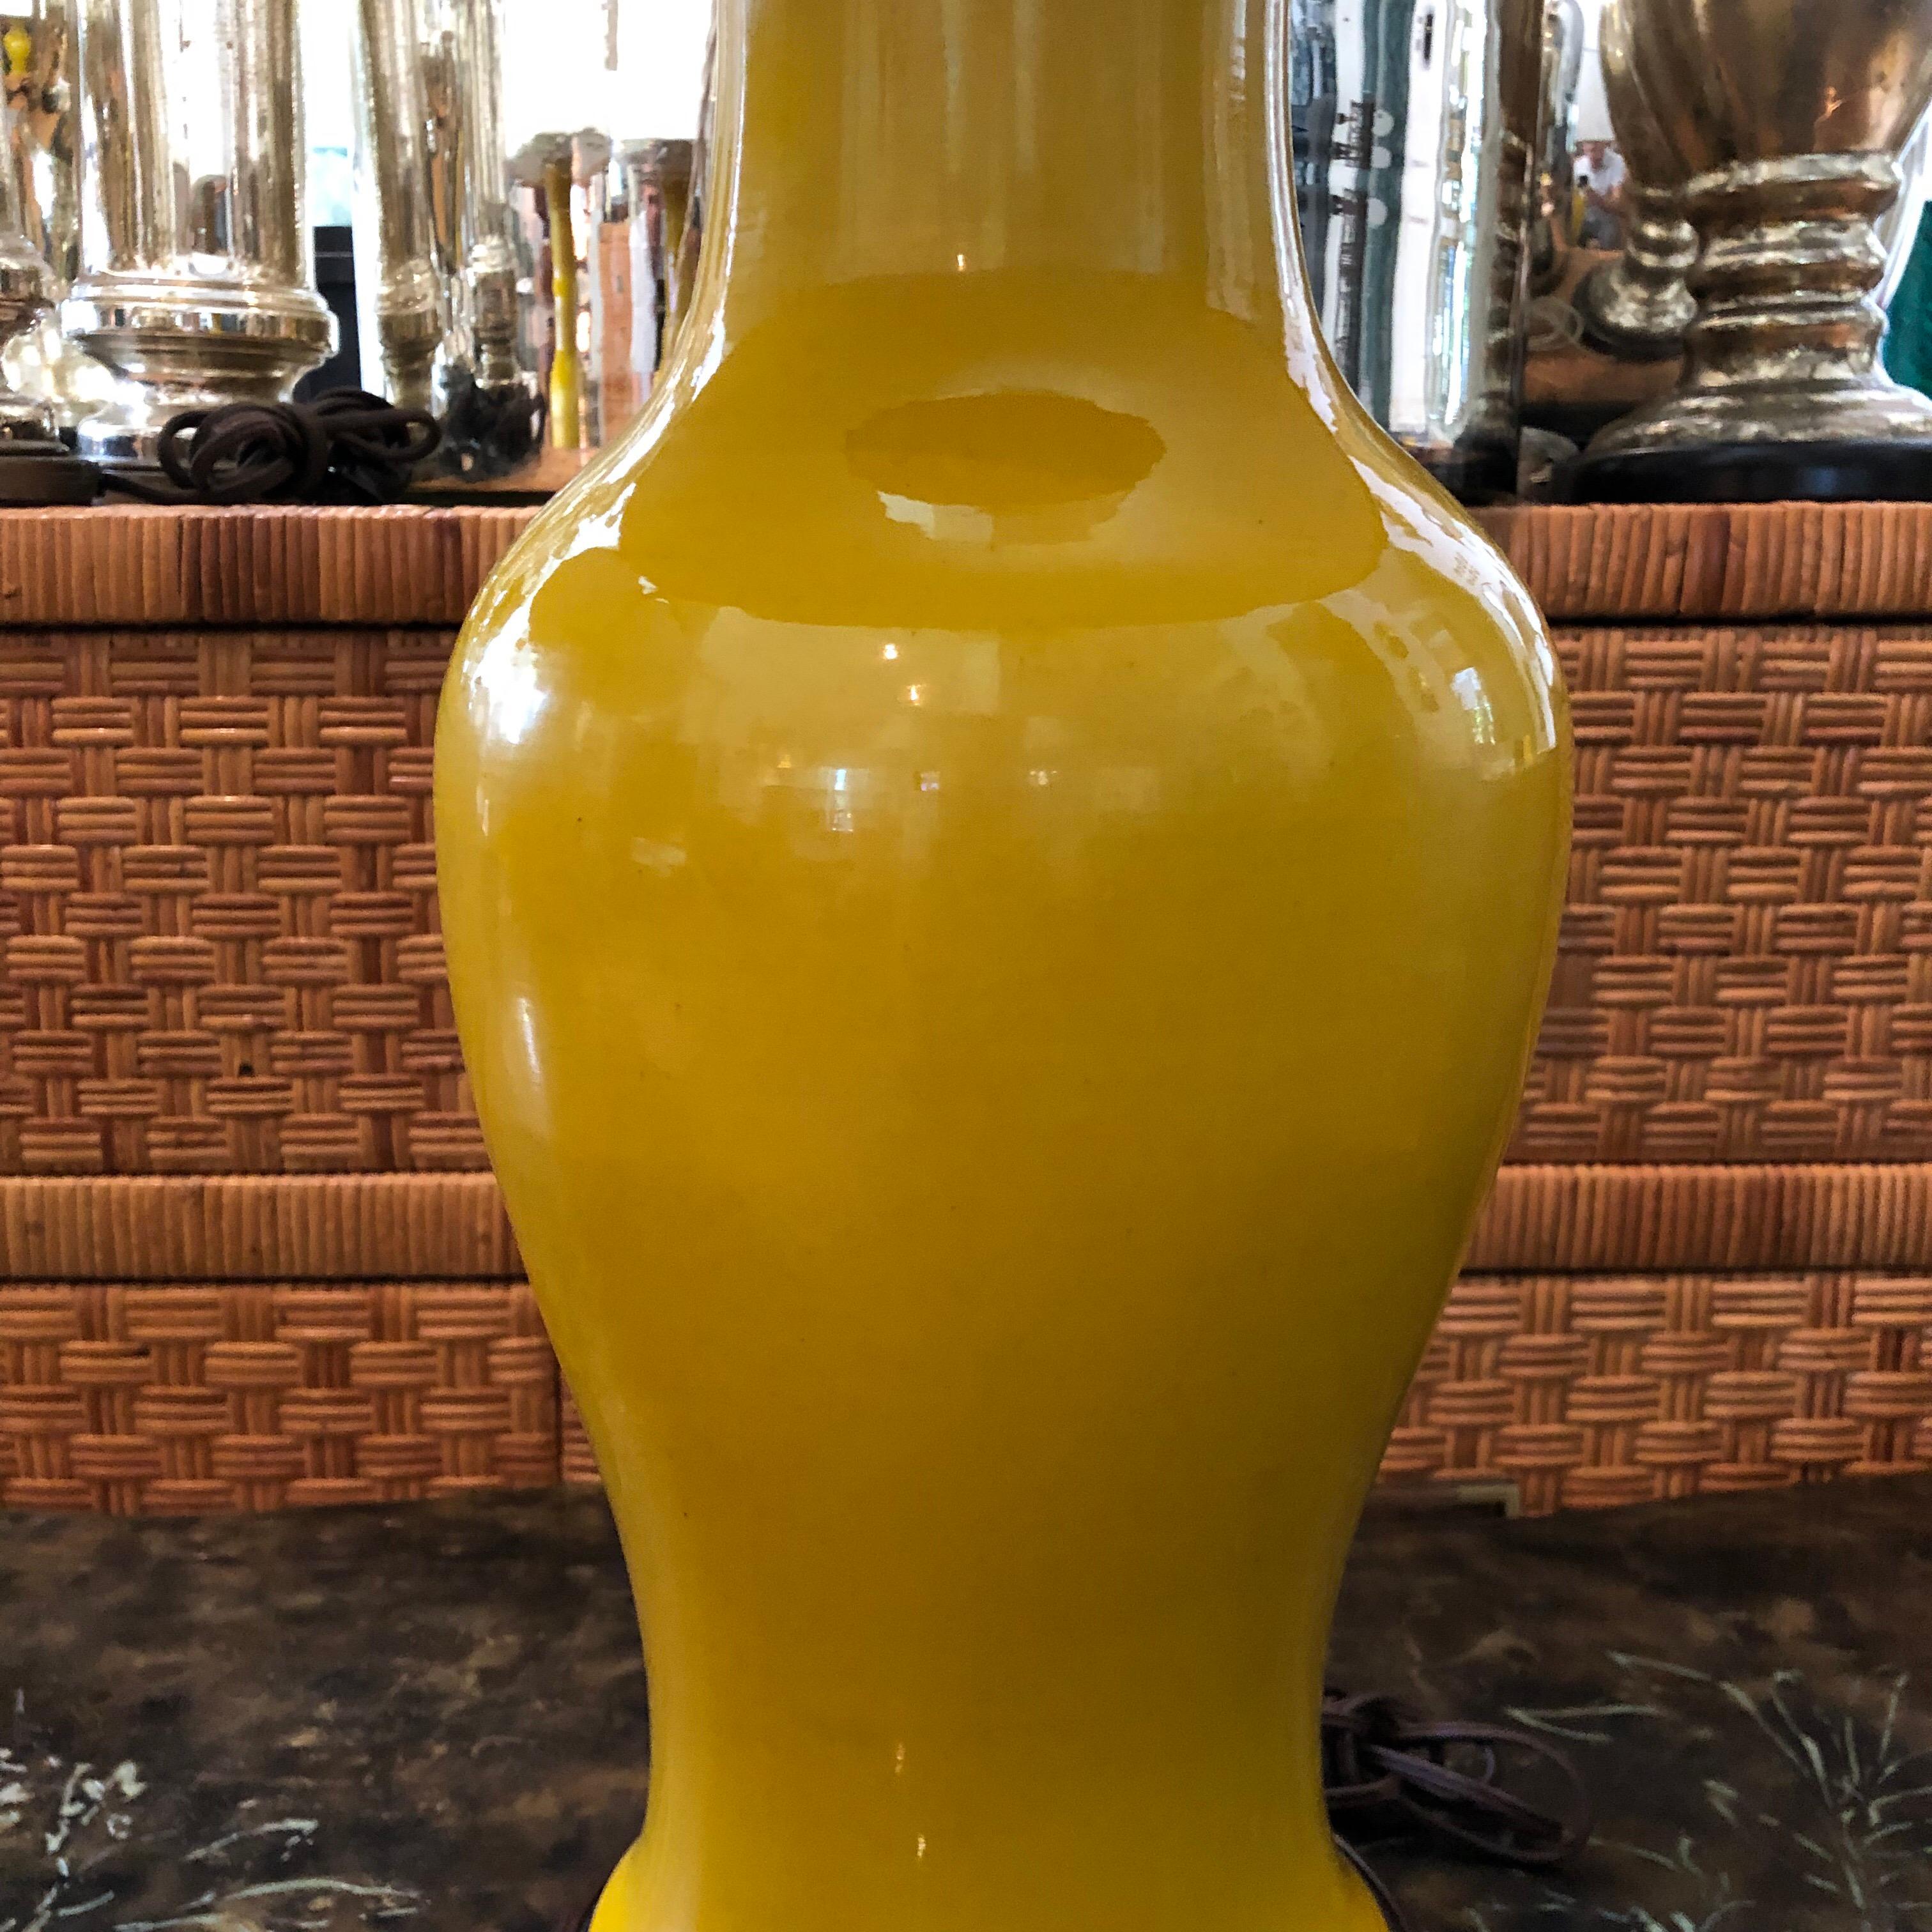 yellow ceramic lamp